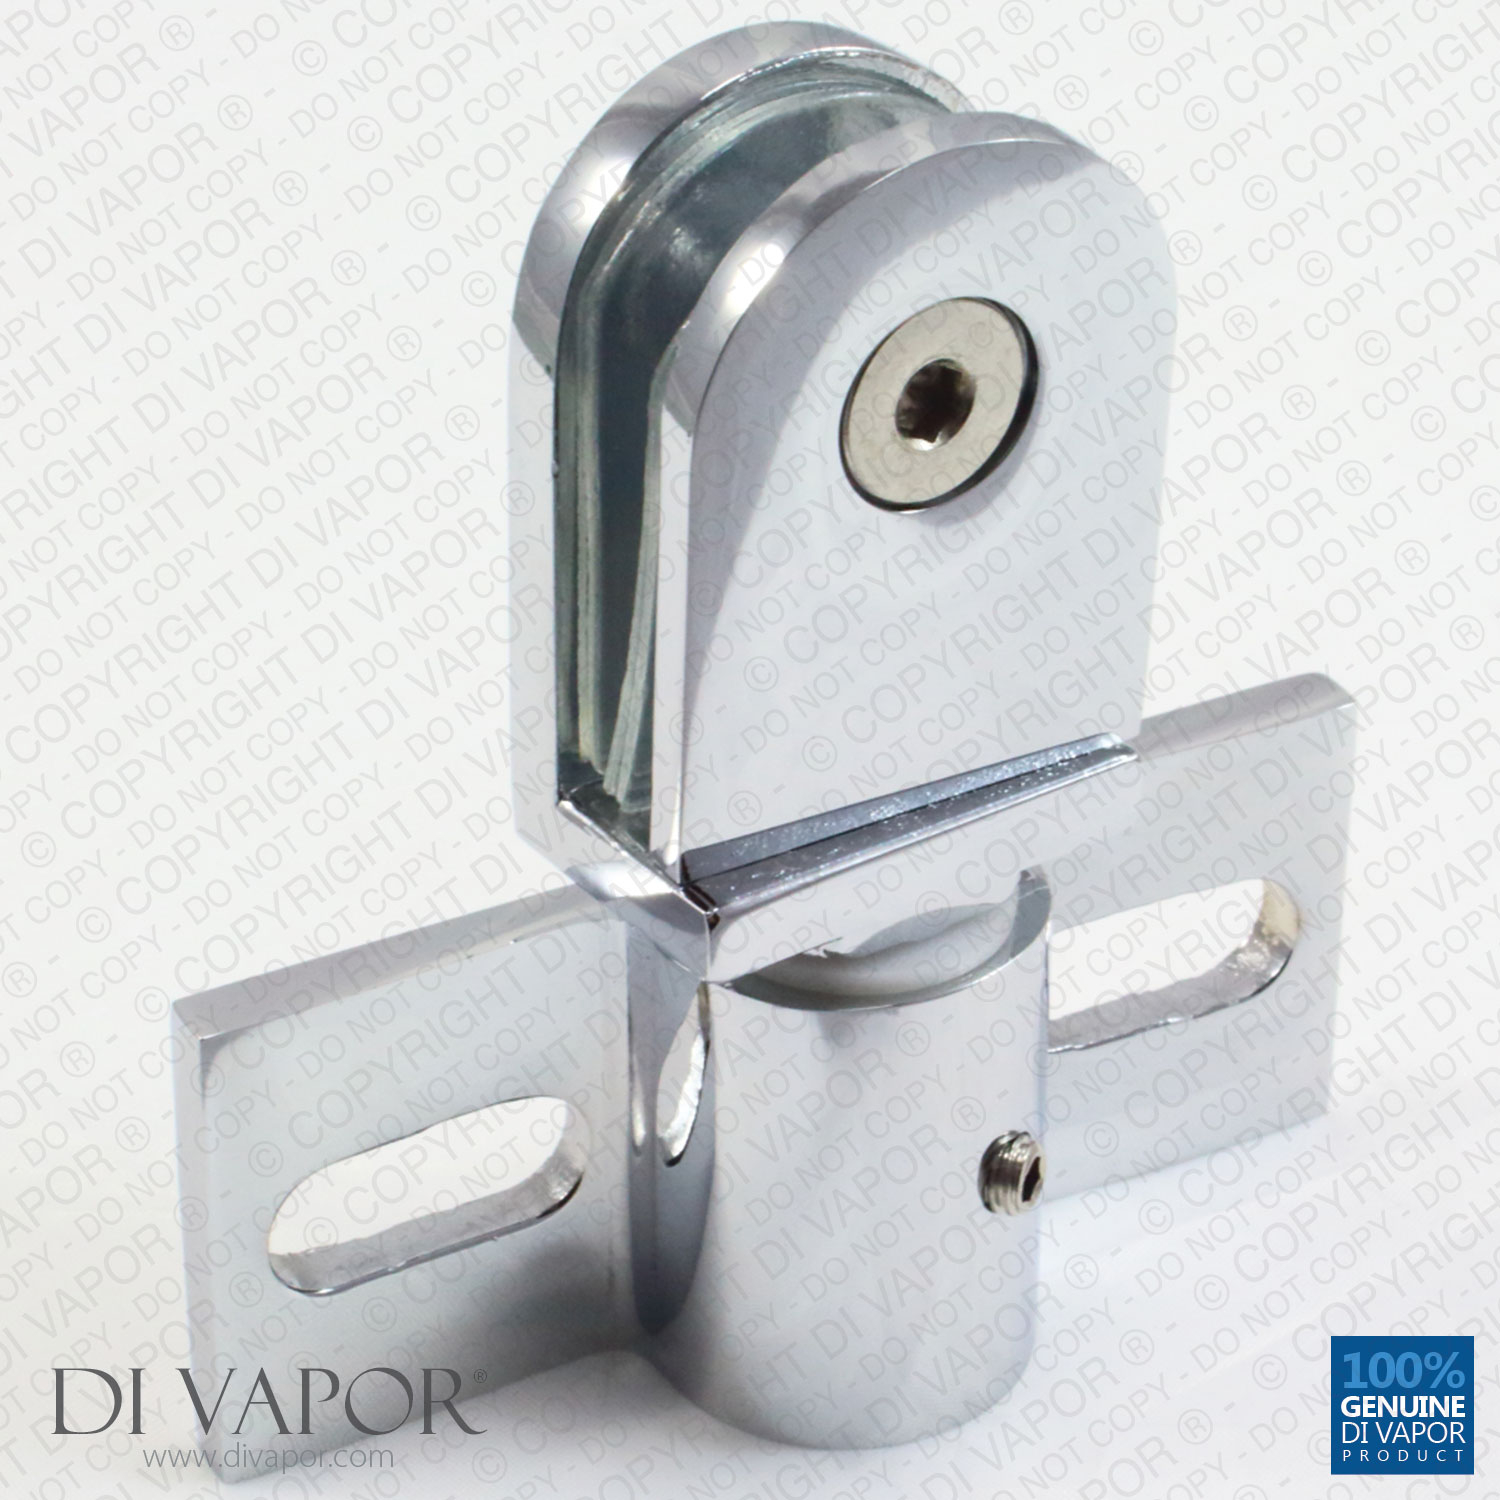 Di Vapor R Glass Shower Door Pivot Hinge Frameless Brackets within dimensions 1500 X 1500